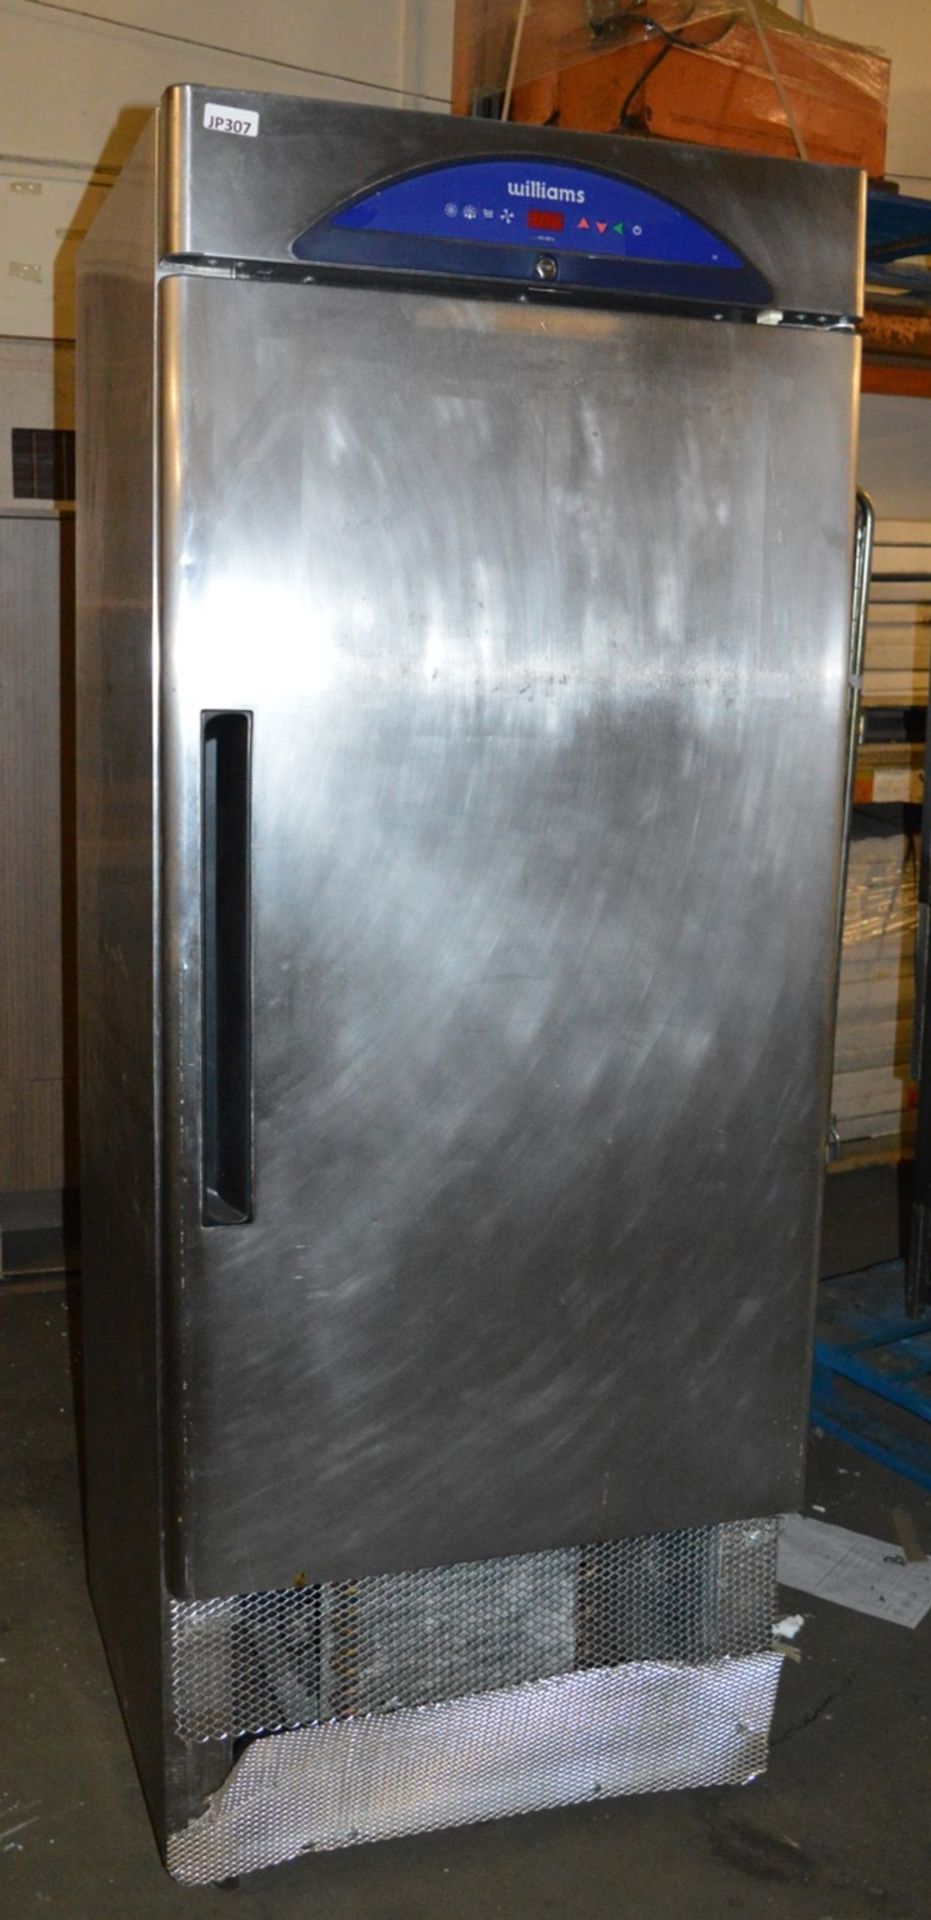 1 x Williams Single Door Upright Freezer - Model LZ16-WB - Stainless Steel Finish - CL232 - Ref